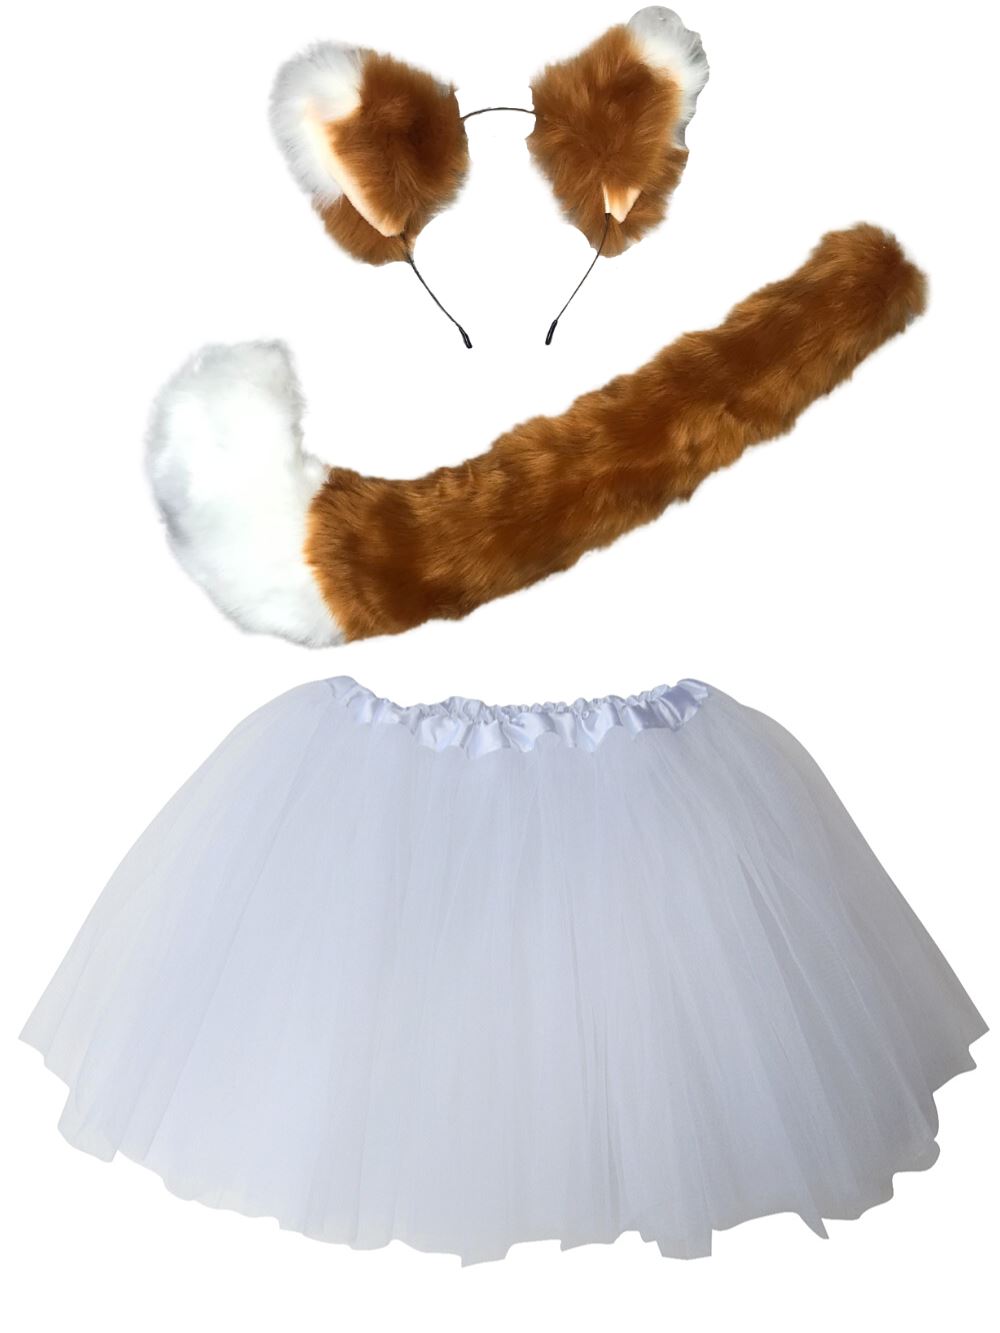 Orange Fox Costume - Complete Kids Costume Set with Tutu, Headband, & Tail - Sydney So Sweet